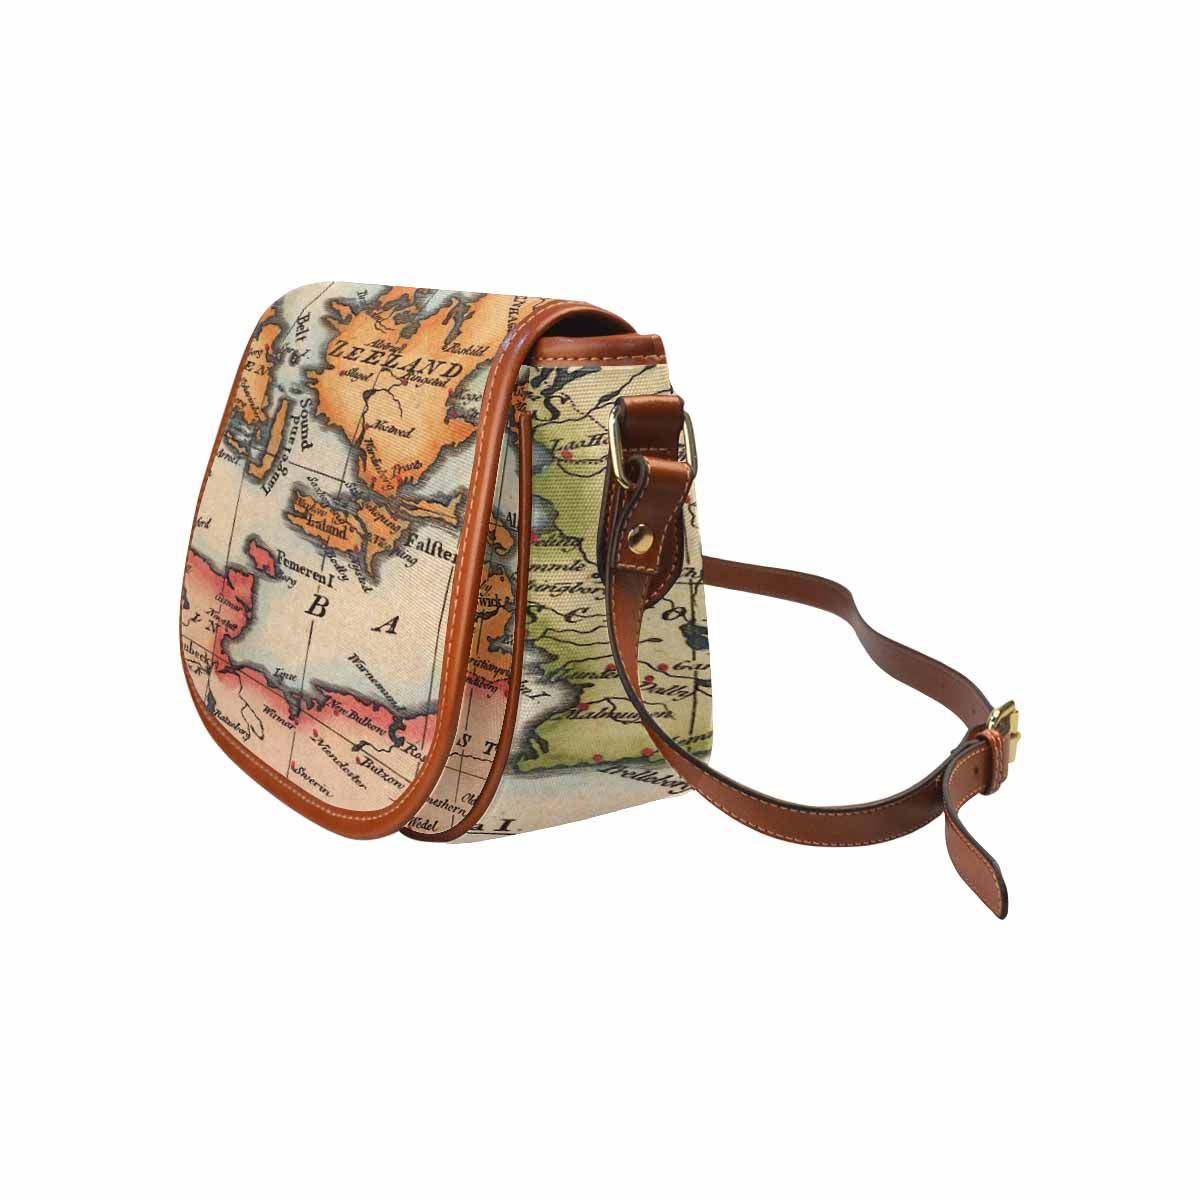 Antique Map design Handbag, saddle bag, Design 34